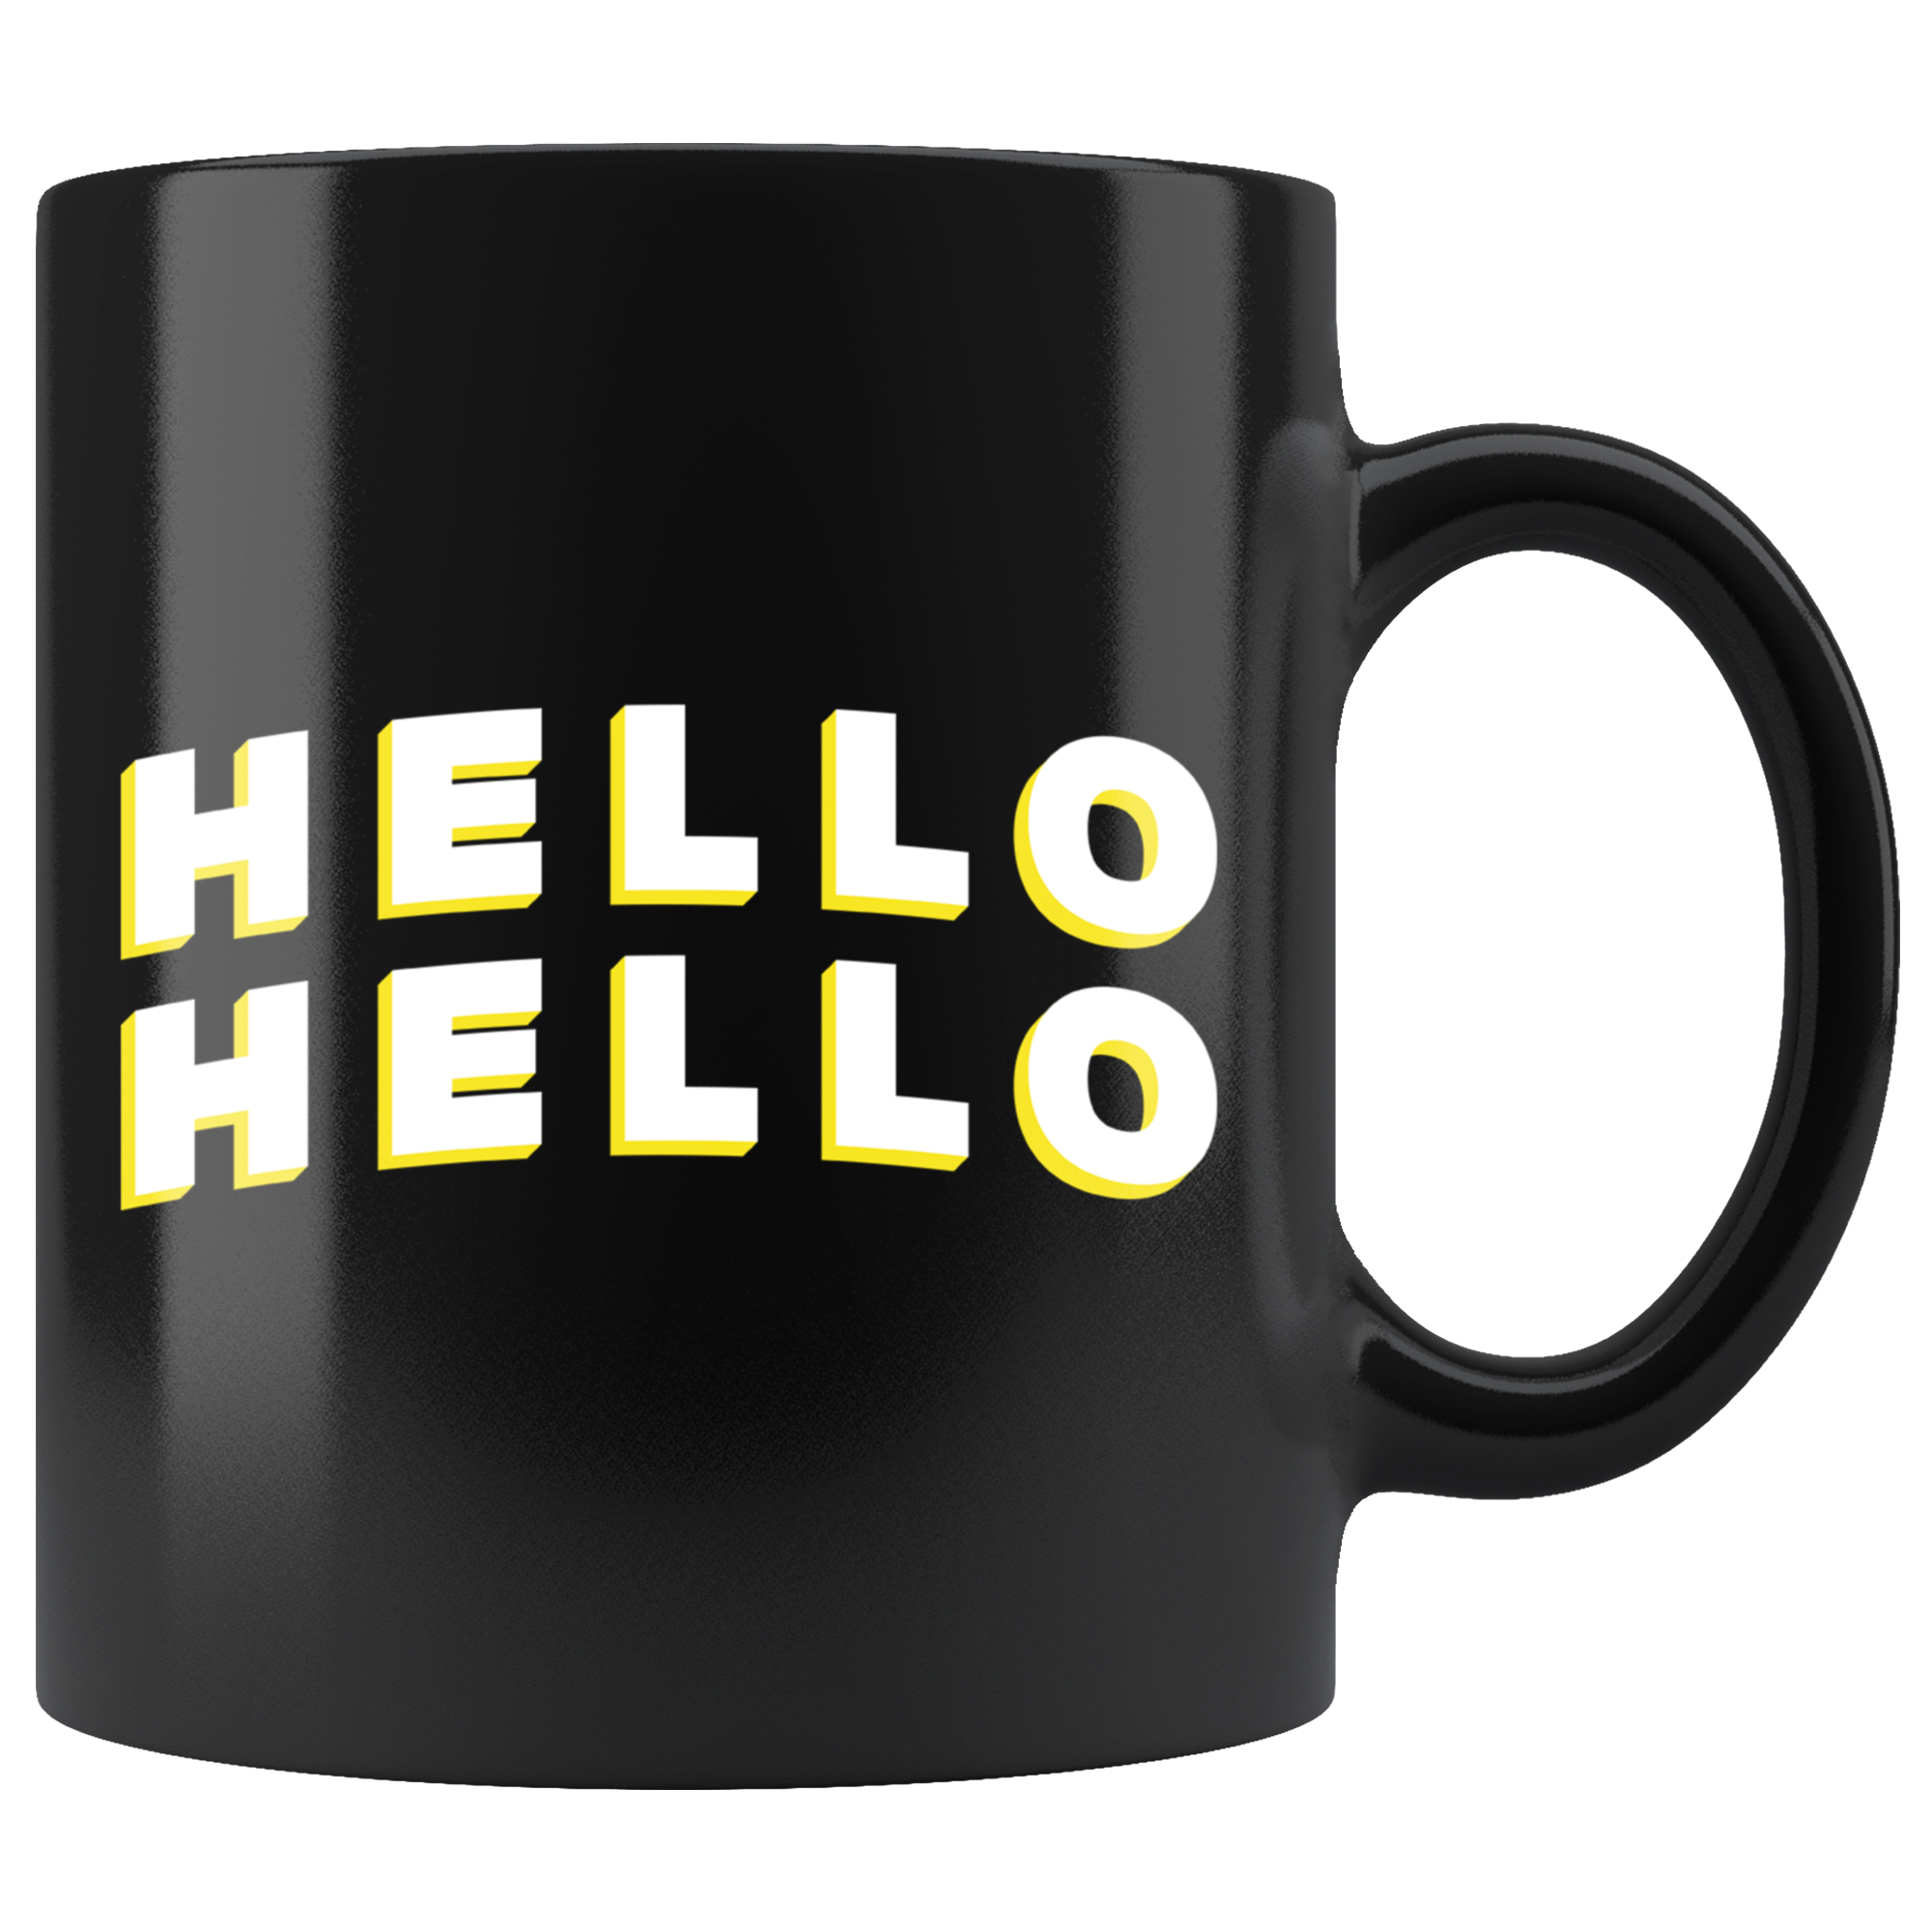 Hello Hello 11 oz RELEVANT Podcast Mug